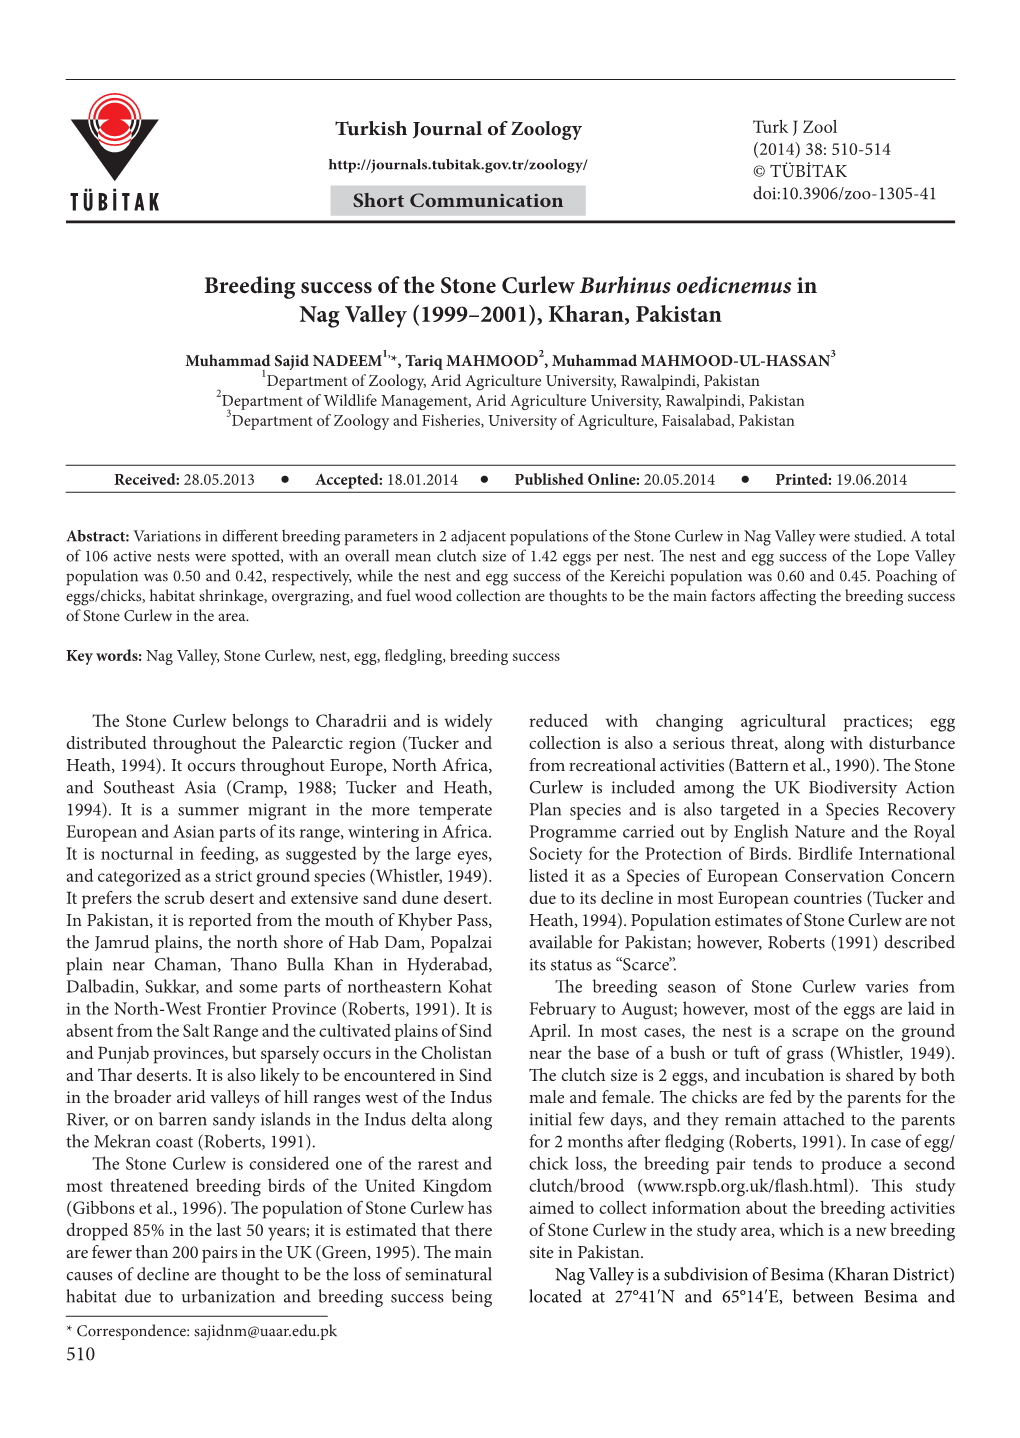 Breeding Success of the Stone Curlew Burhinus Oedicnemus in Nag Valley (1999–2001), Kharan, Pakistan